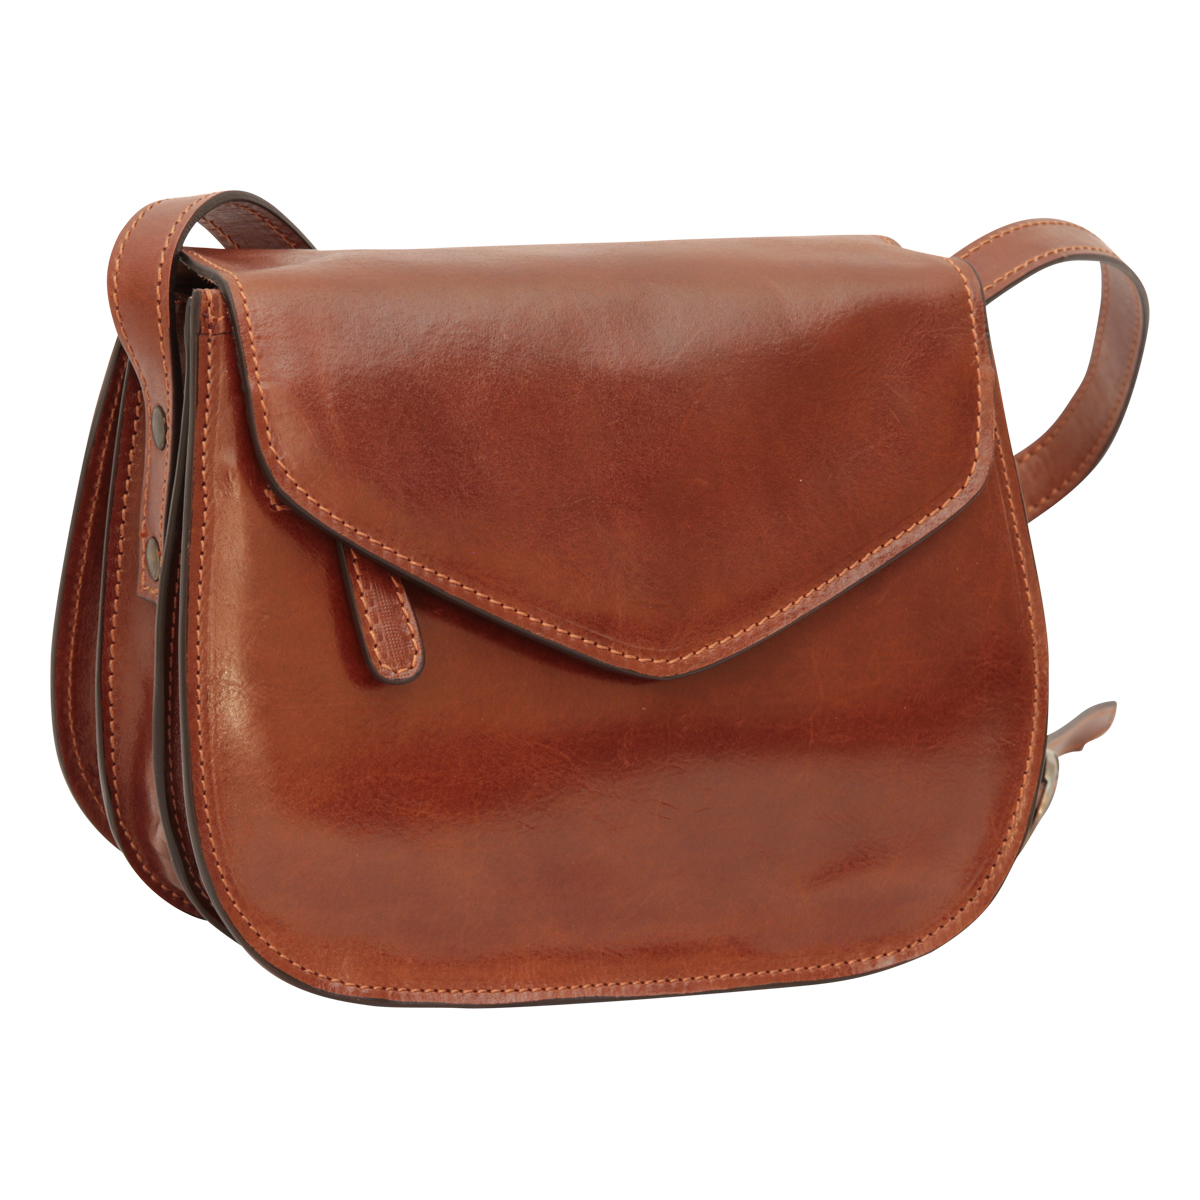 Full grain calfskin shoulder bag - brown | 209605MA UK | Old Angler Firenze